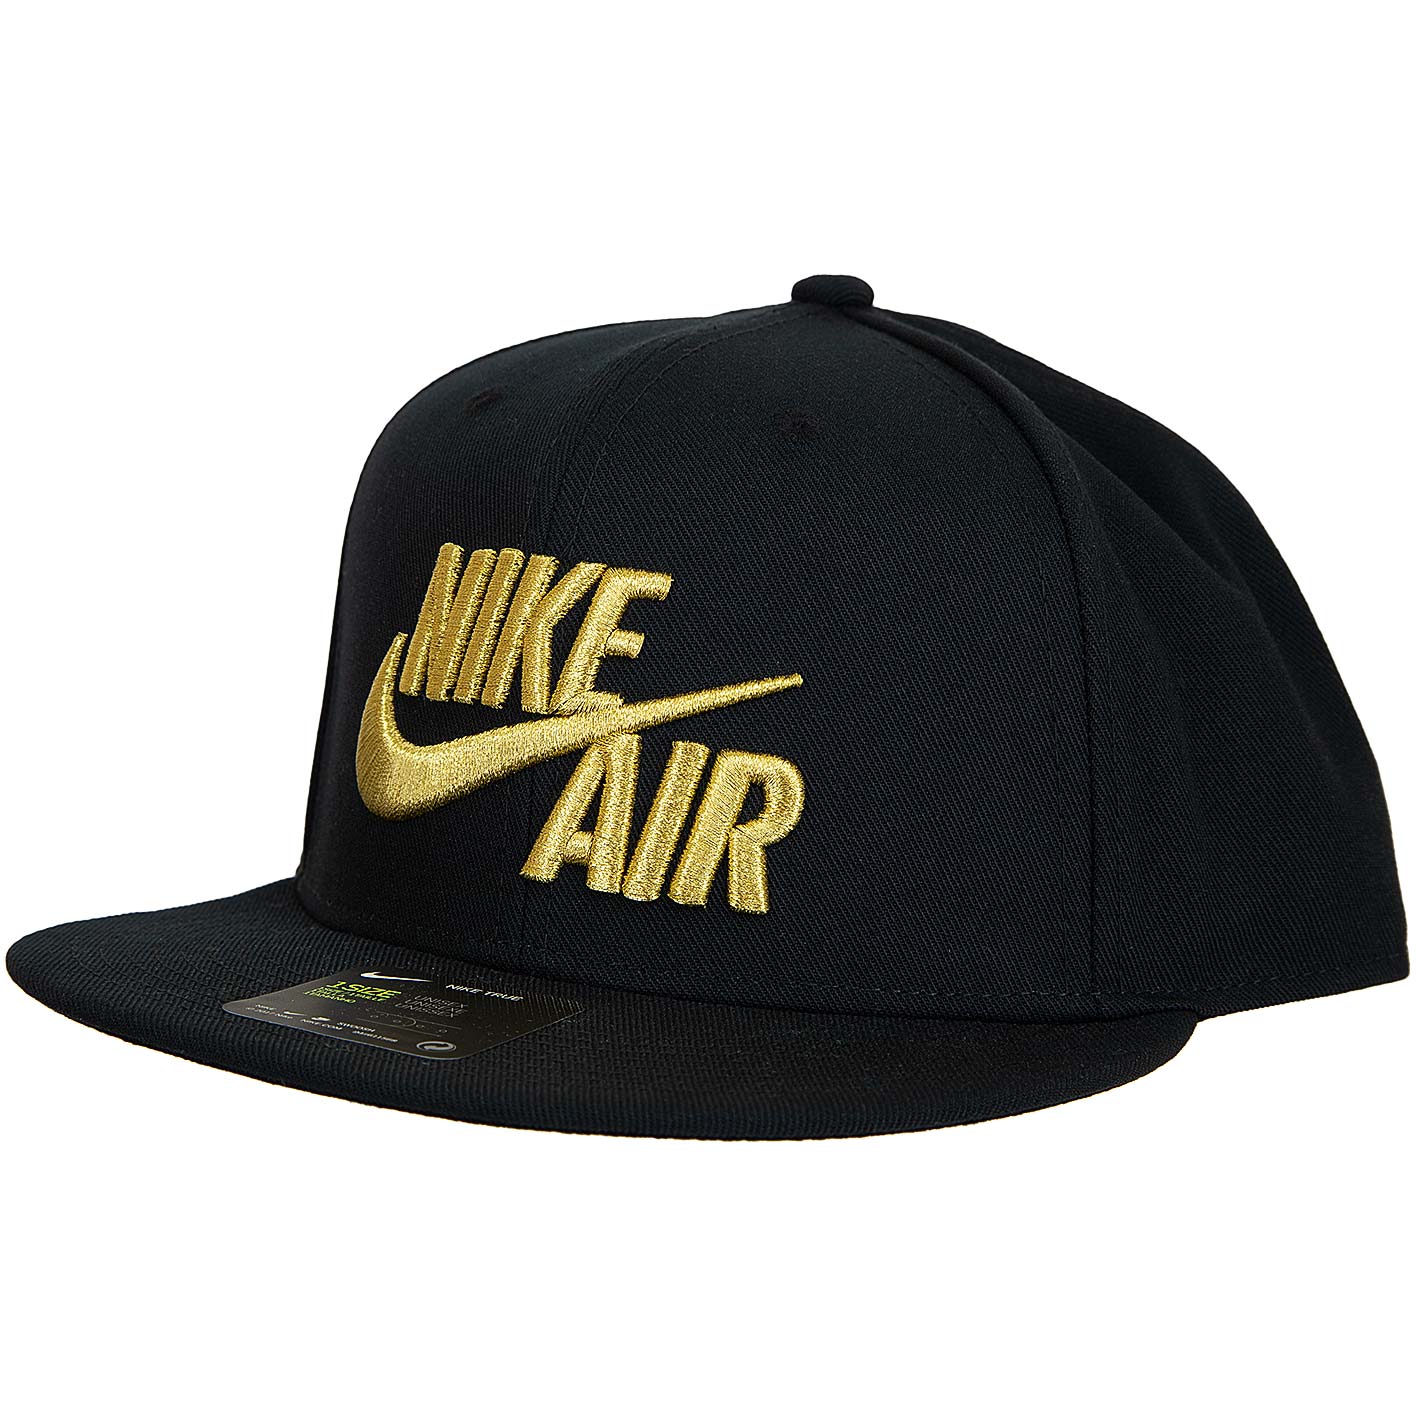 ☆ Nike Snapback Cap Air True Classic black/gold - hier bestellen!